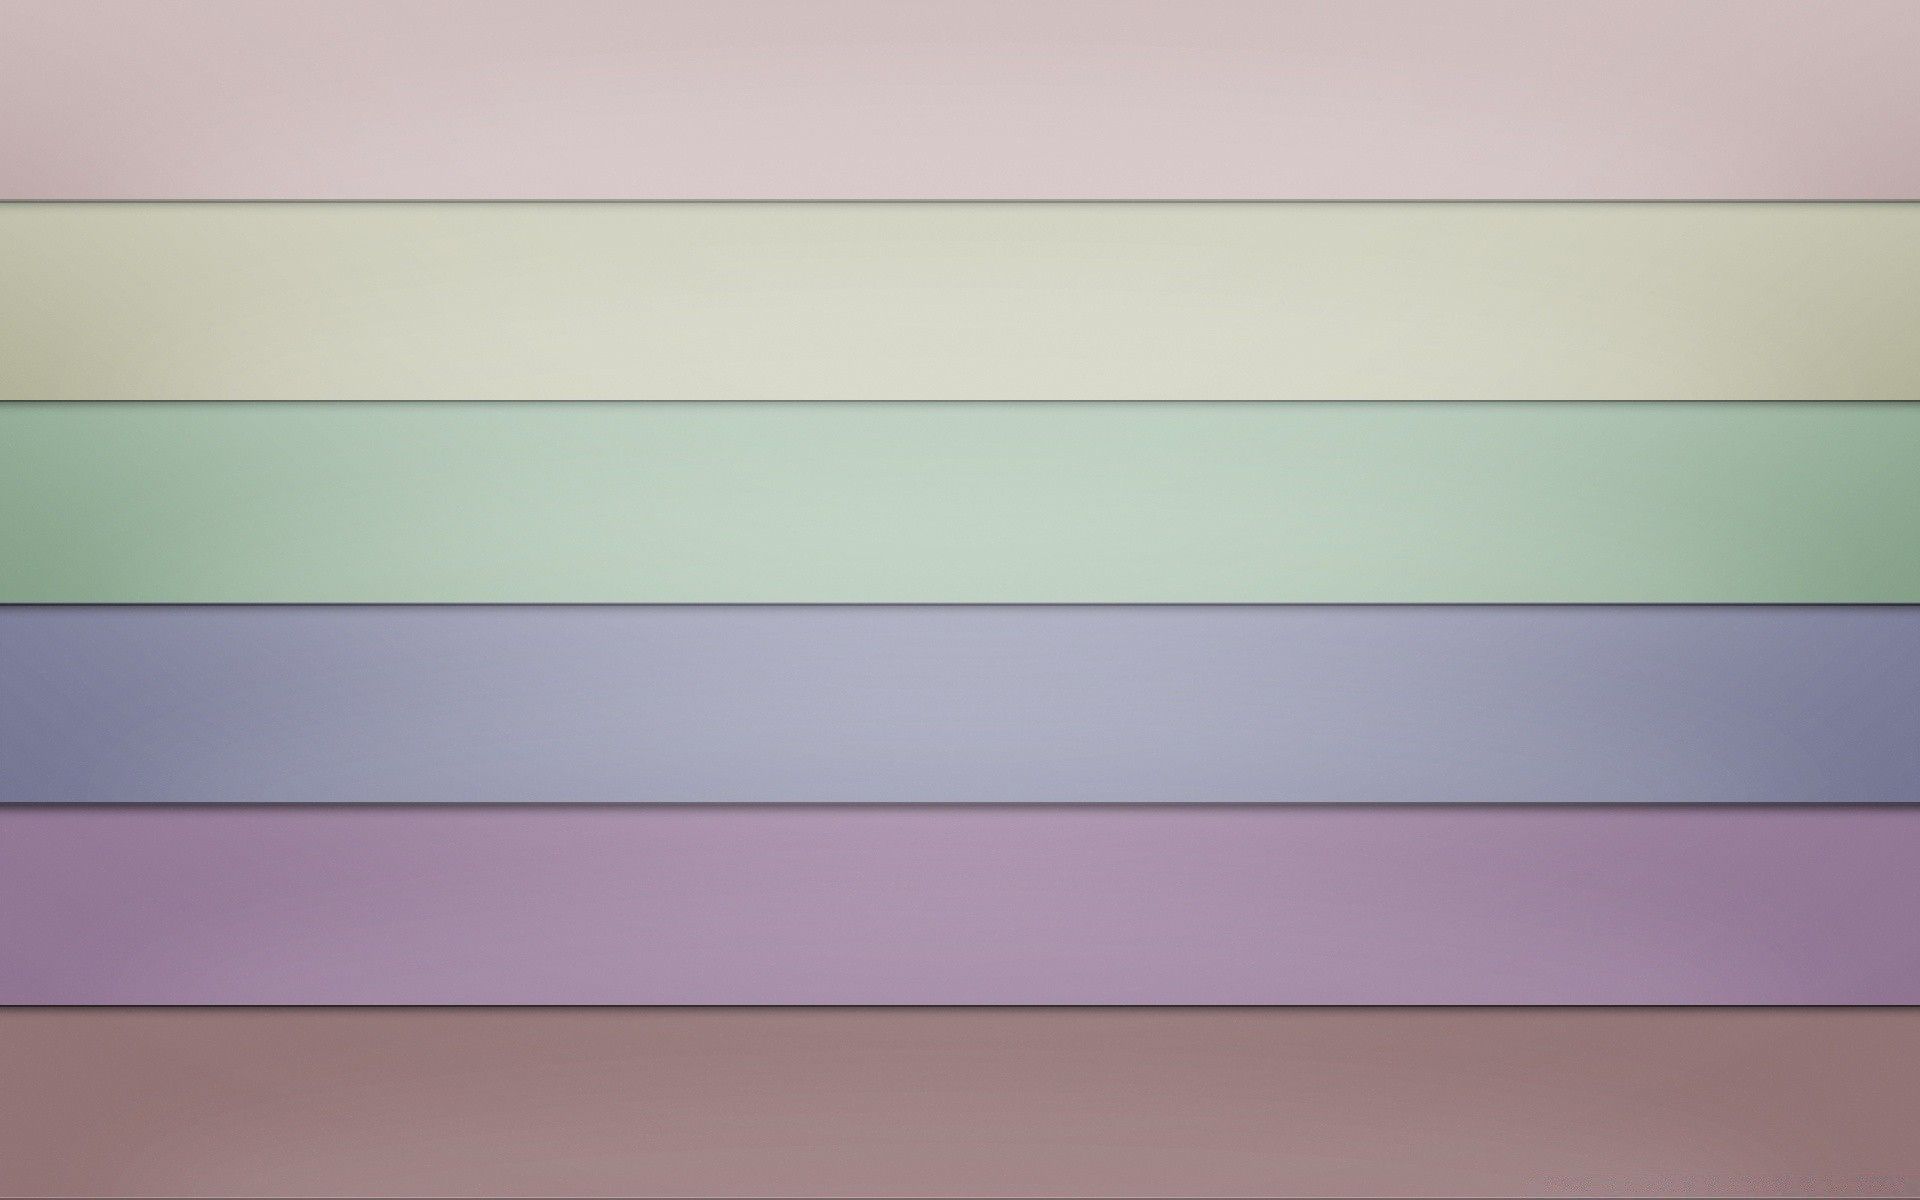 Fondos de pantalla de color pastel - FondosMil